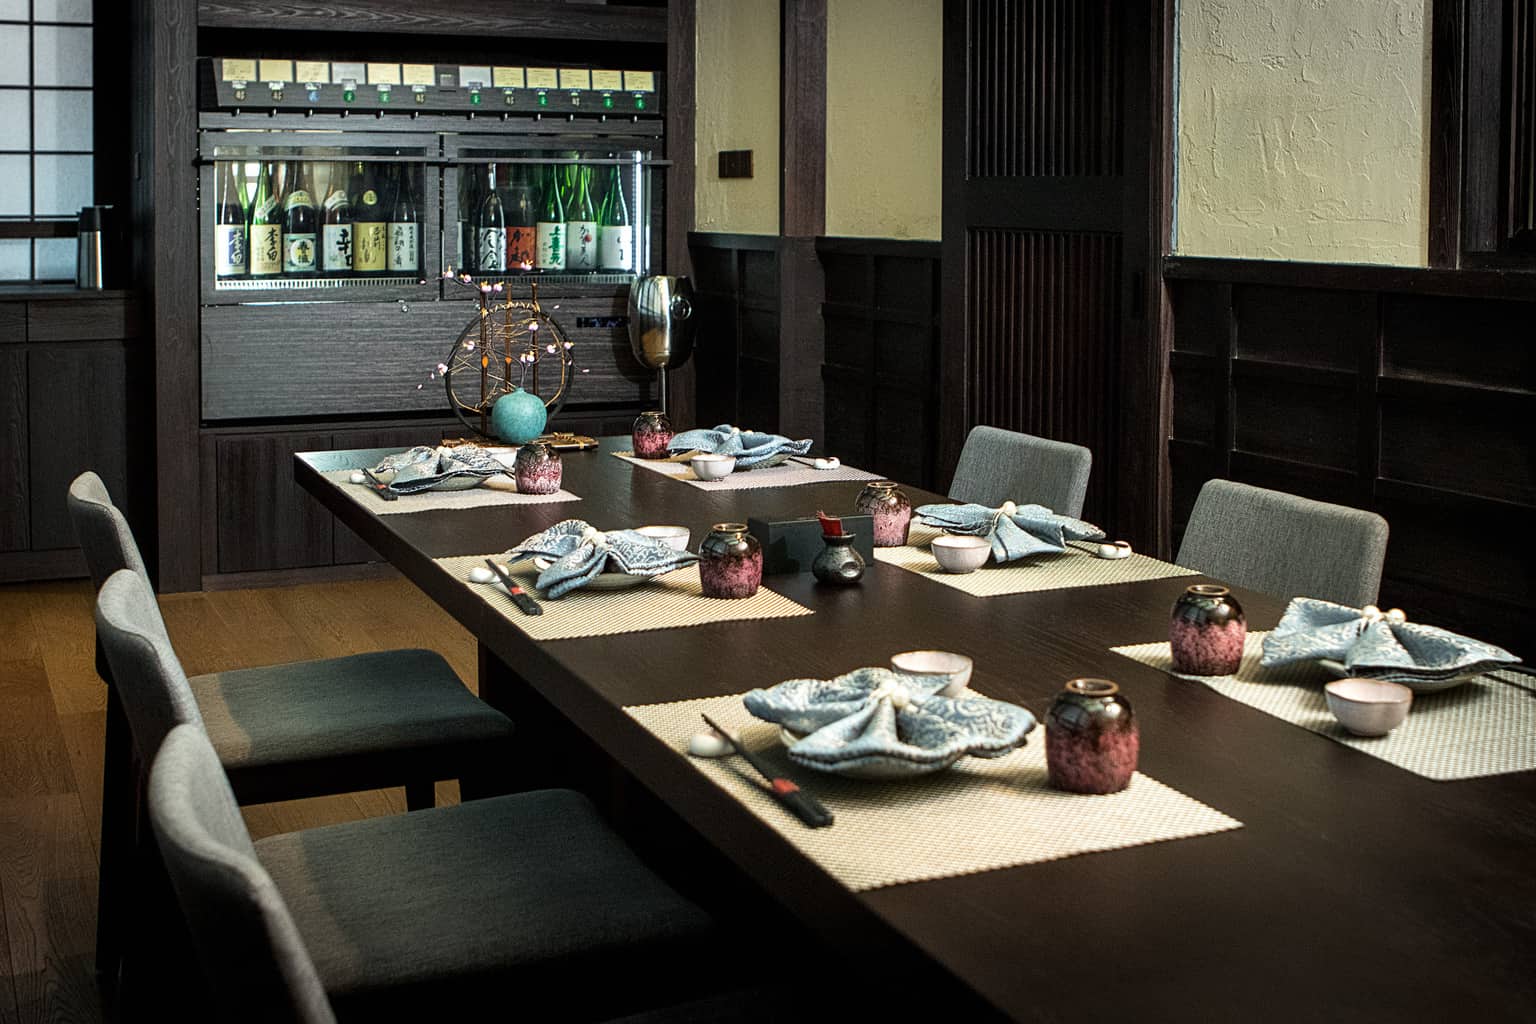 Featured image for “New Chef at Nadagogo Japanese Restaurant, Wyndham Grand”